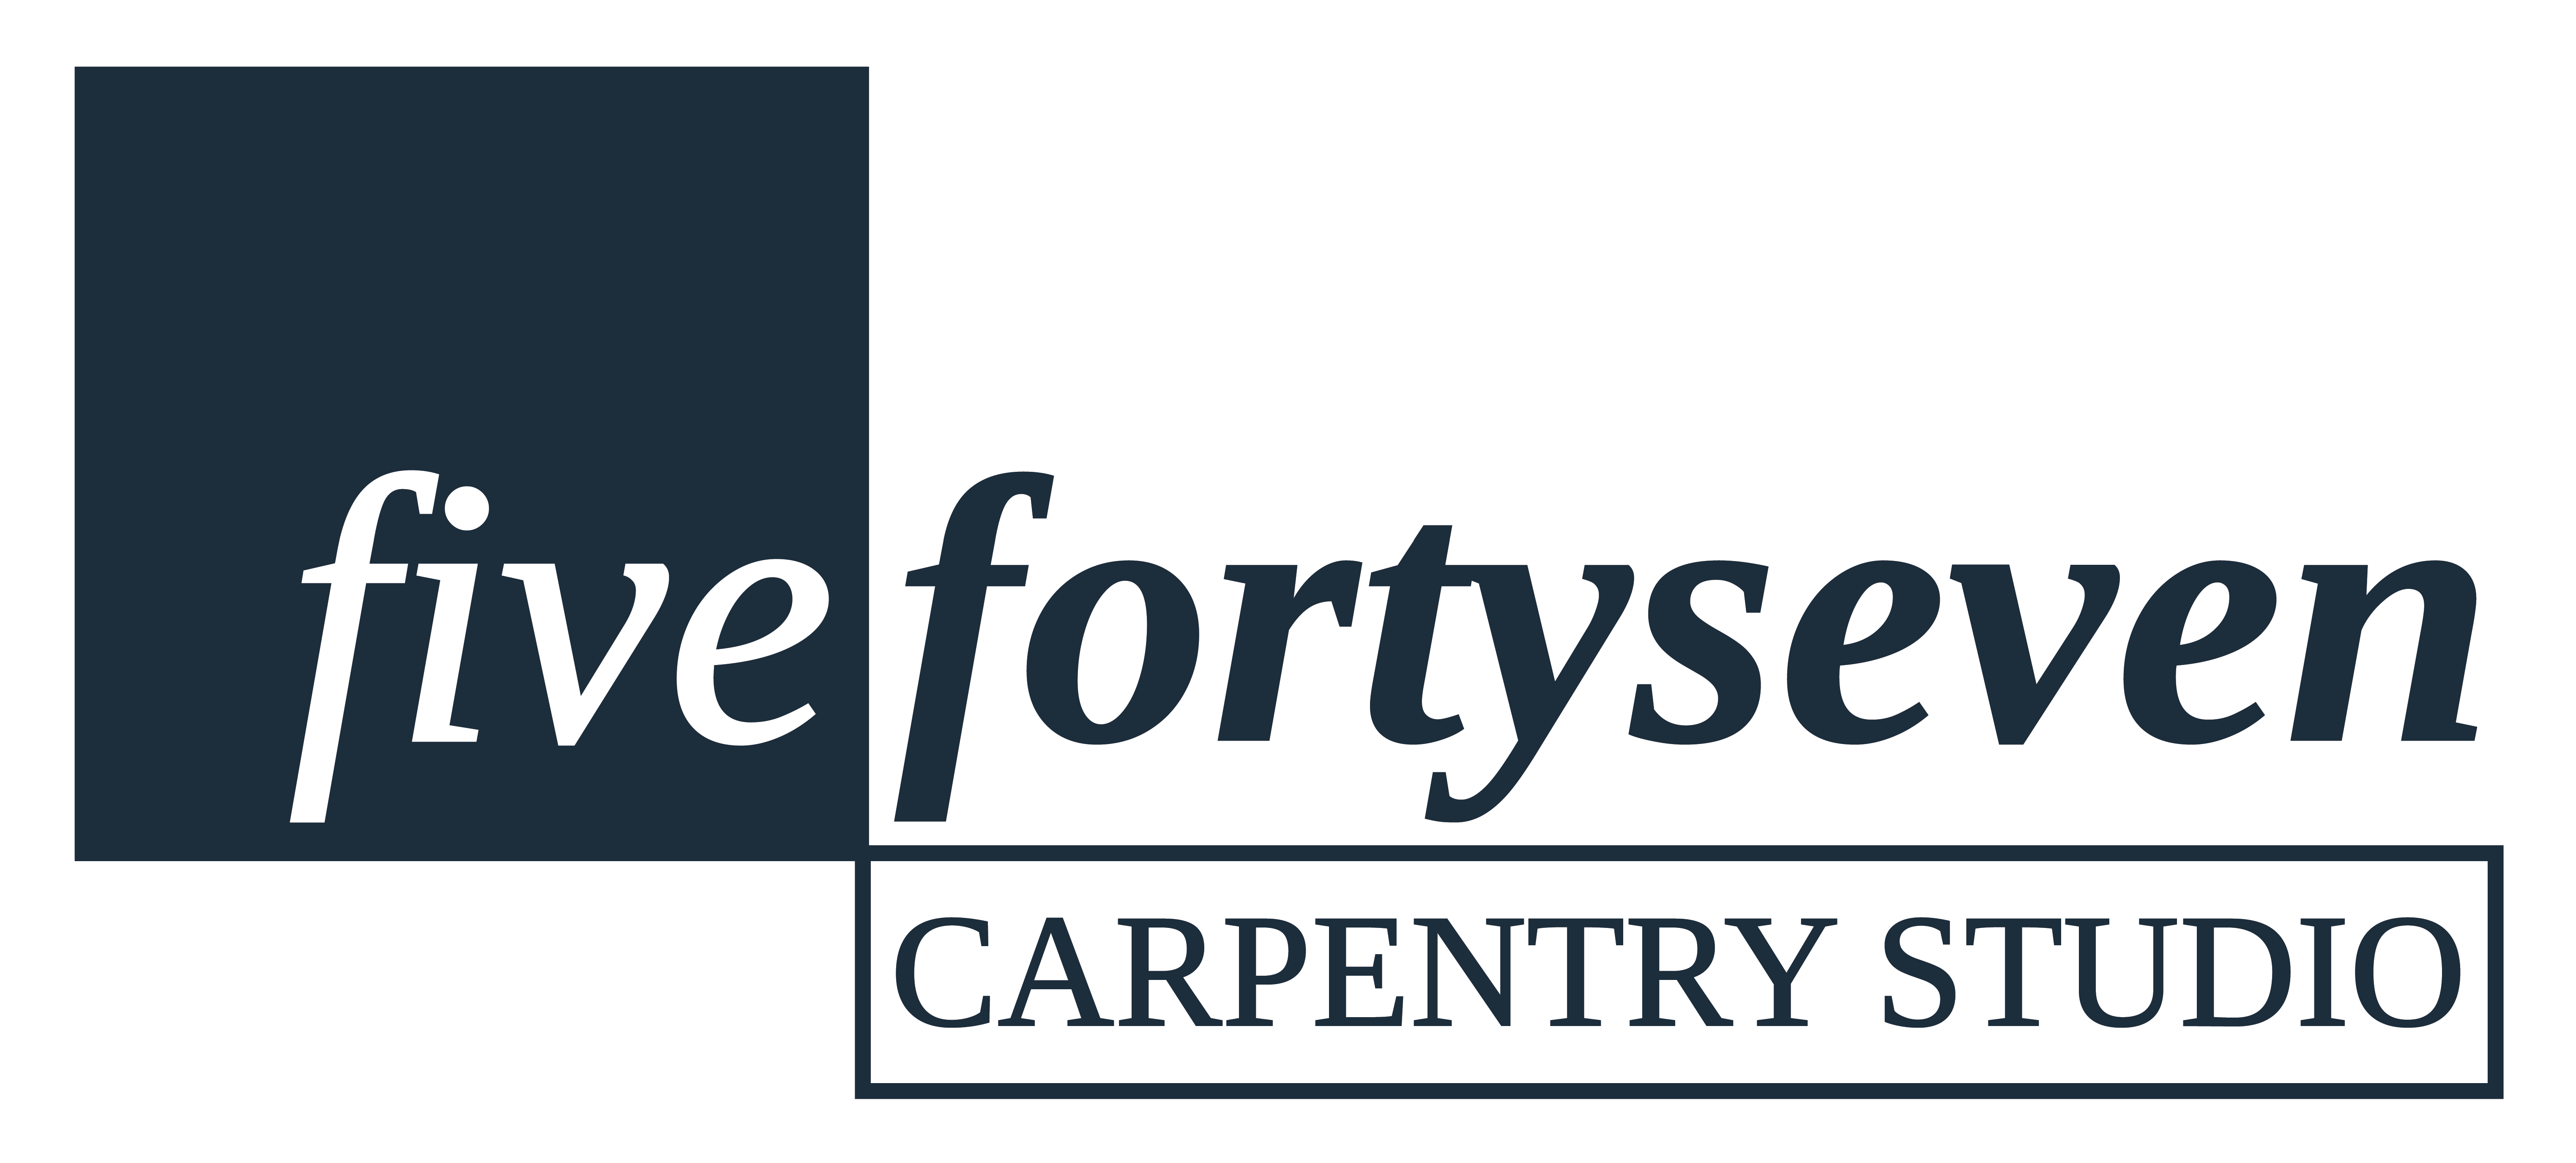 fivefortyseven Carpentry Studio Logo